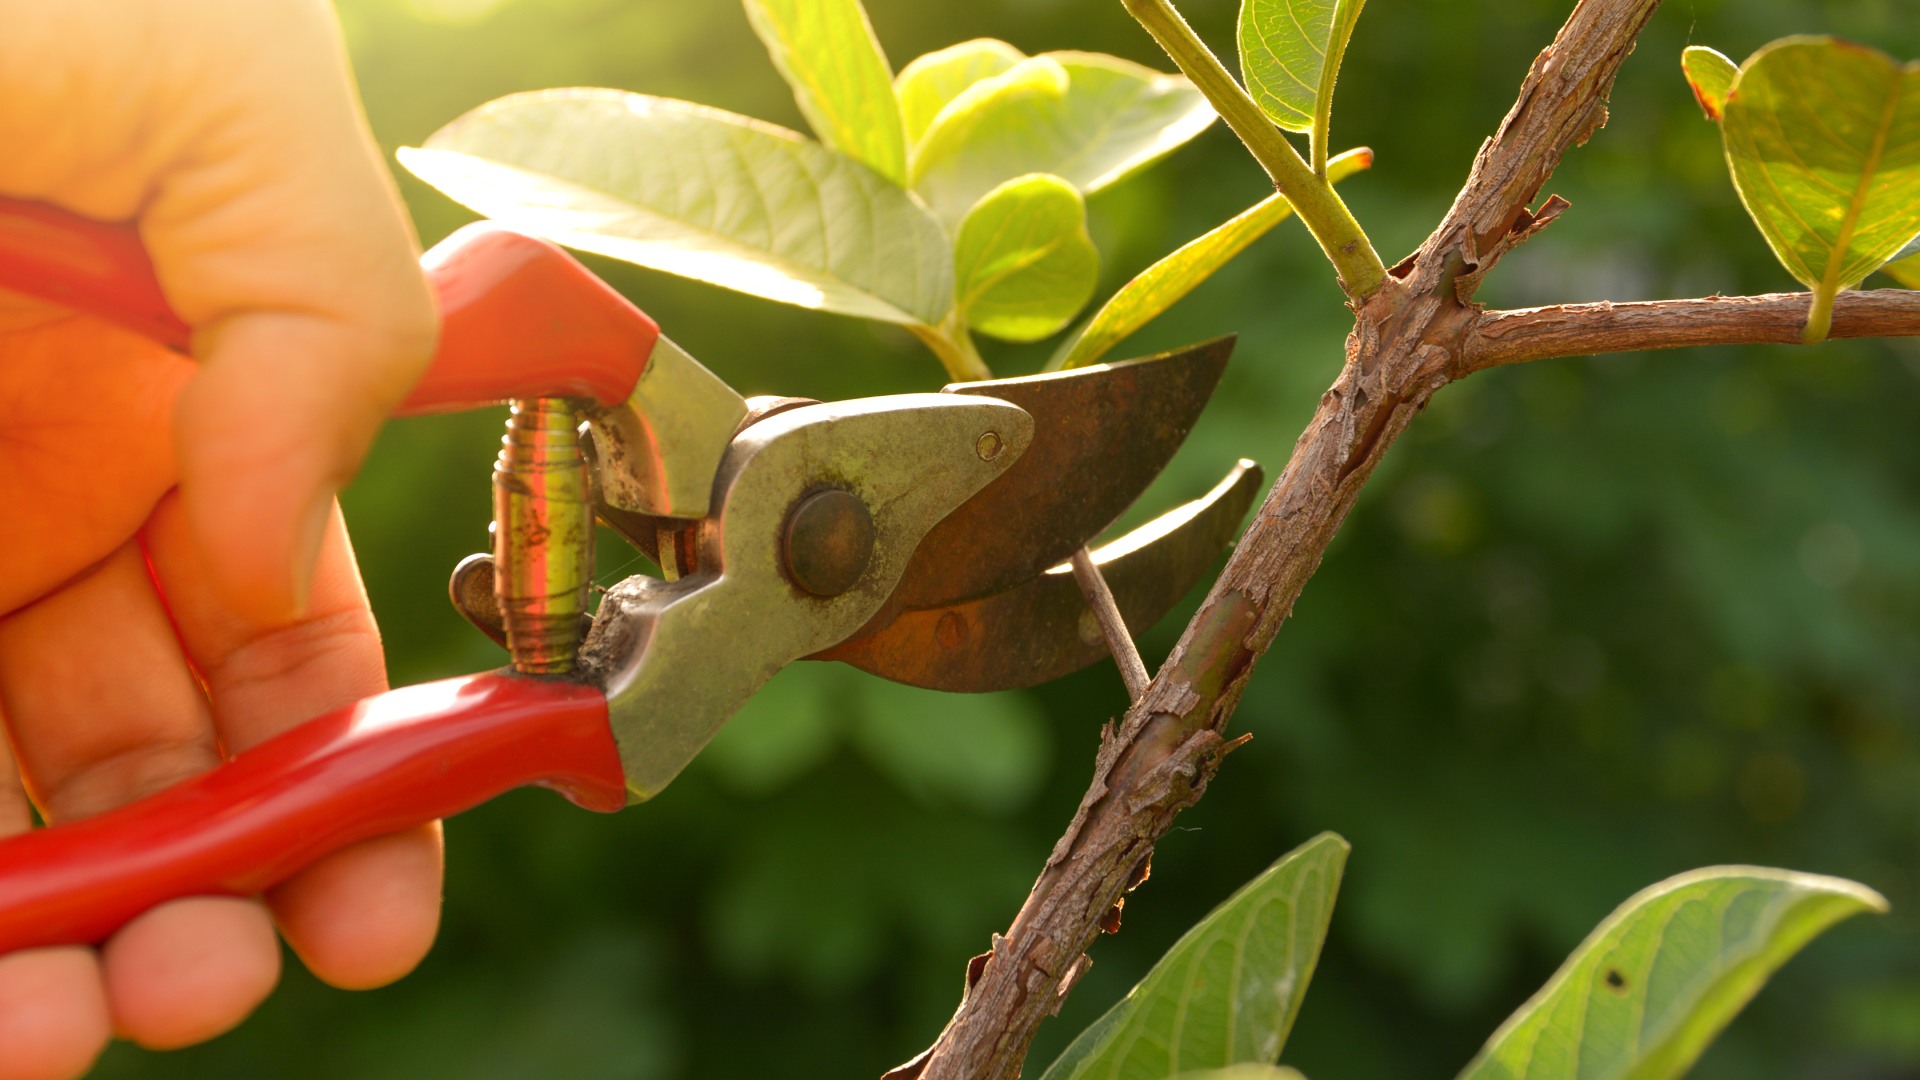 Tree Health 101: Trimming vs Pruning